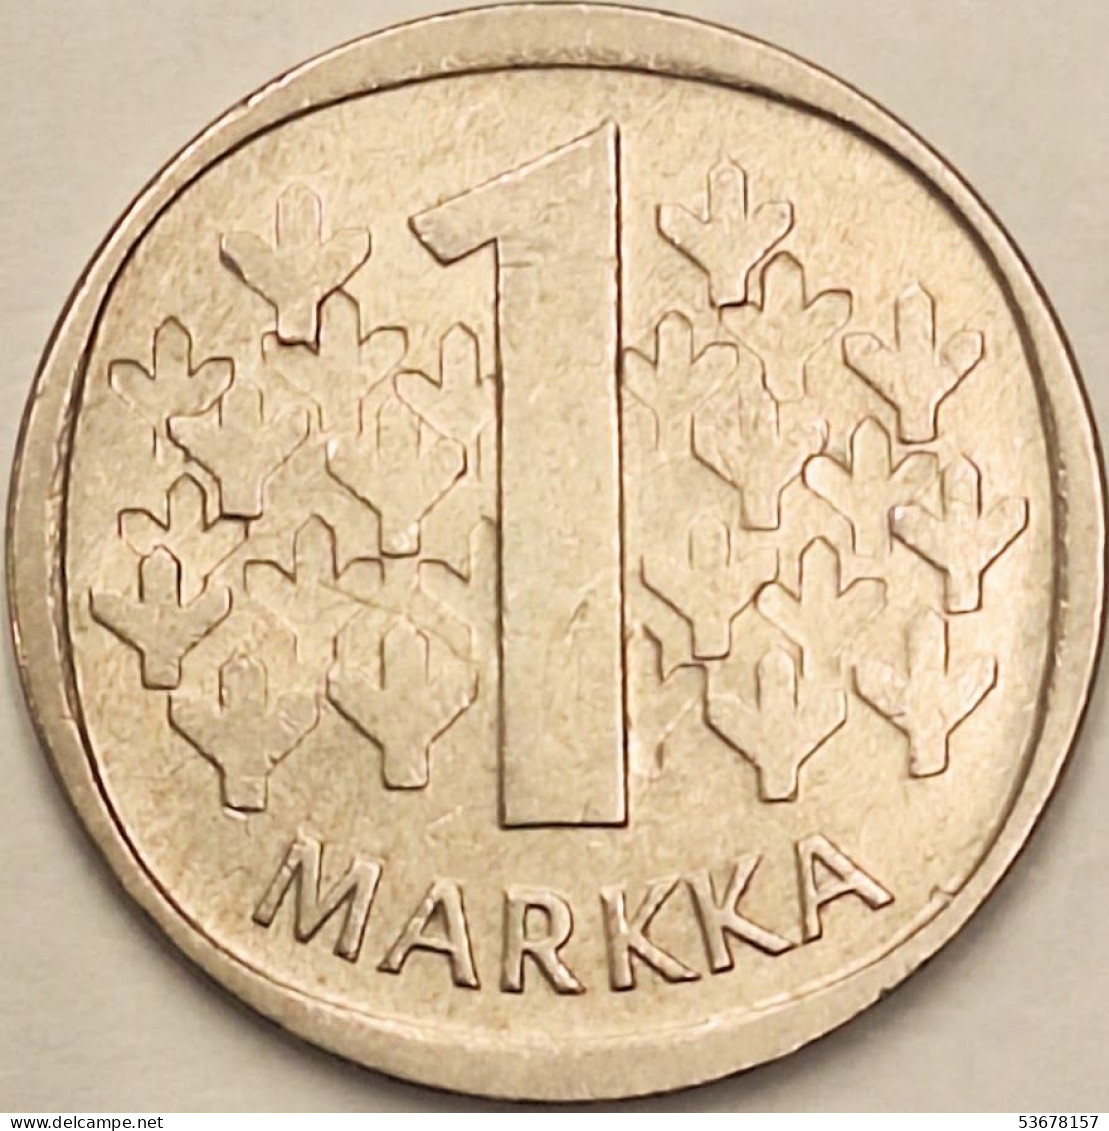 Finland - Markka 1985 N, KM# 49a (#3954) - Finnland